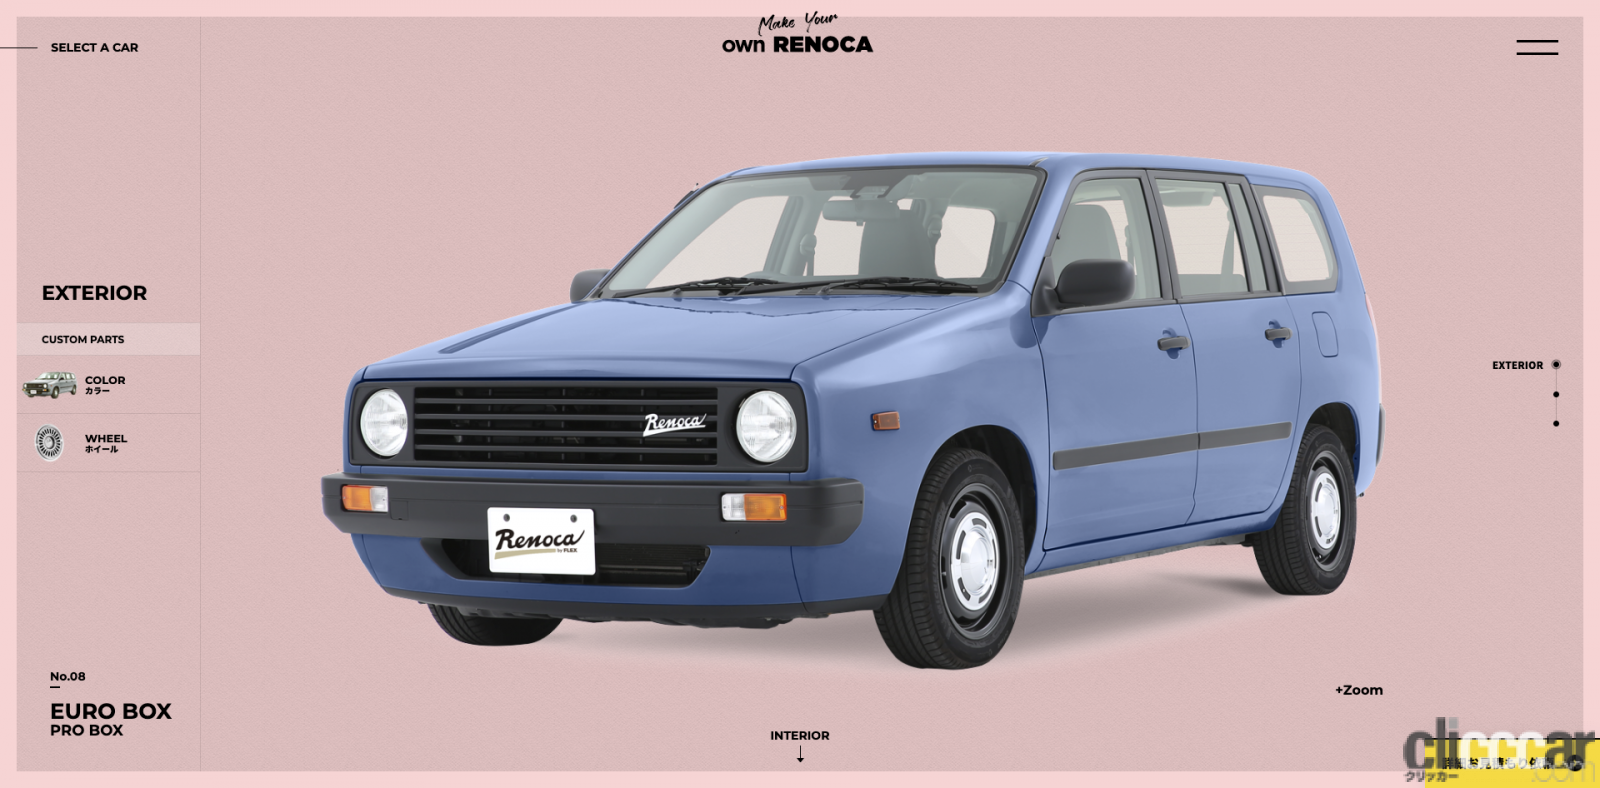 Flex Renoca Eurobox 008 画像 営業車の代名詞 トヨタ プロボックス がおしゃれに変身 アウトドアも楽しいrnoca リノカ ユーロボックス登場 Clicccar Com